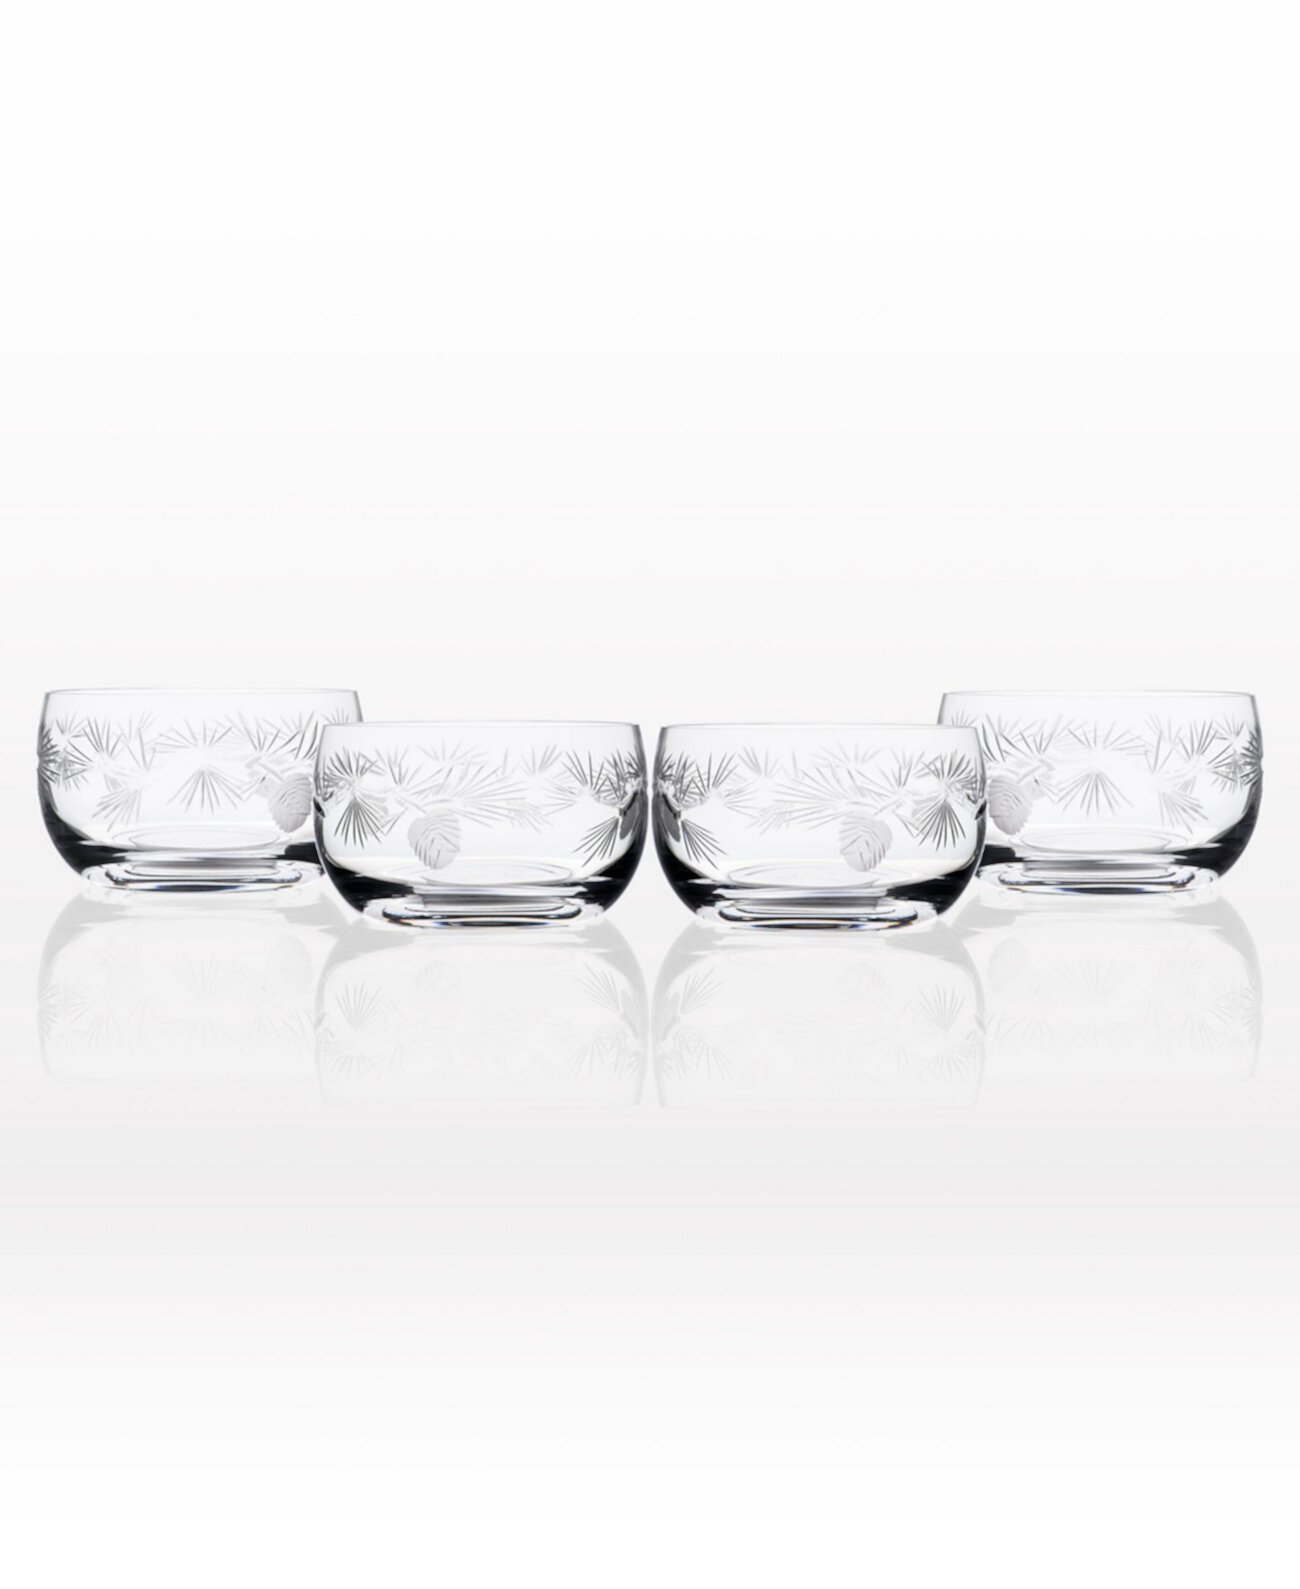 Маленькая миска Icy Pine Clear, 6 дюймов - набор из 4 мисок Rolf Glass